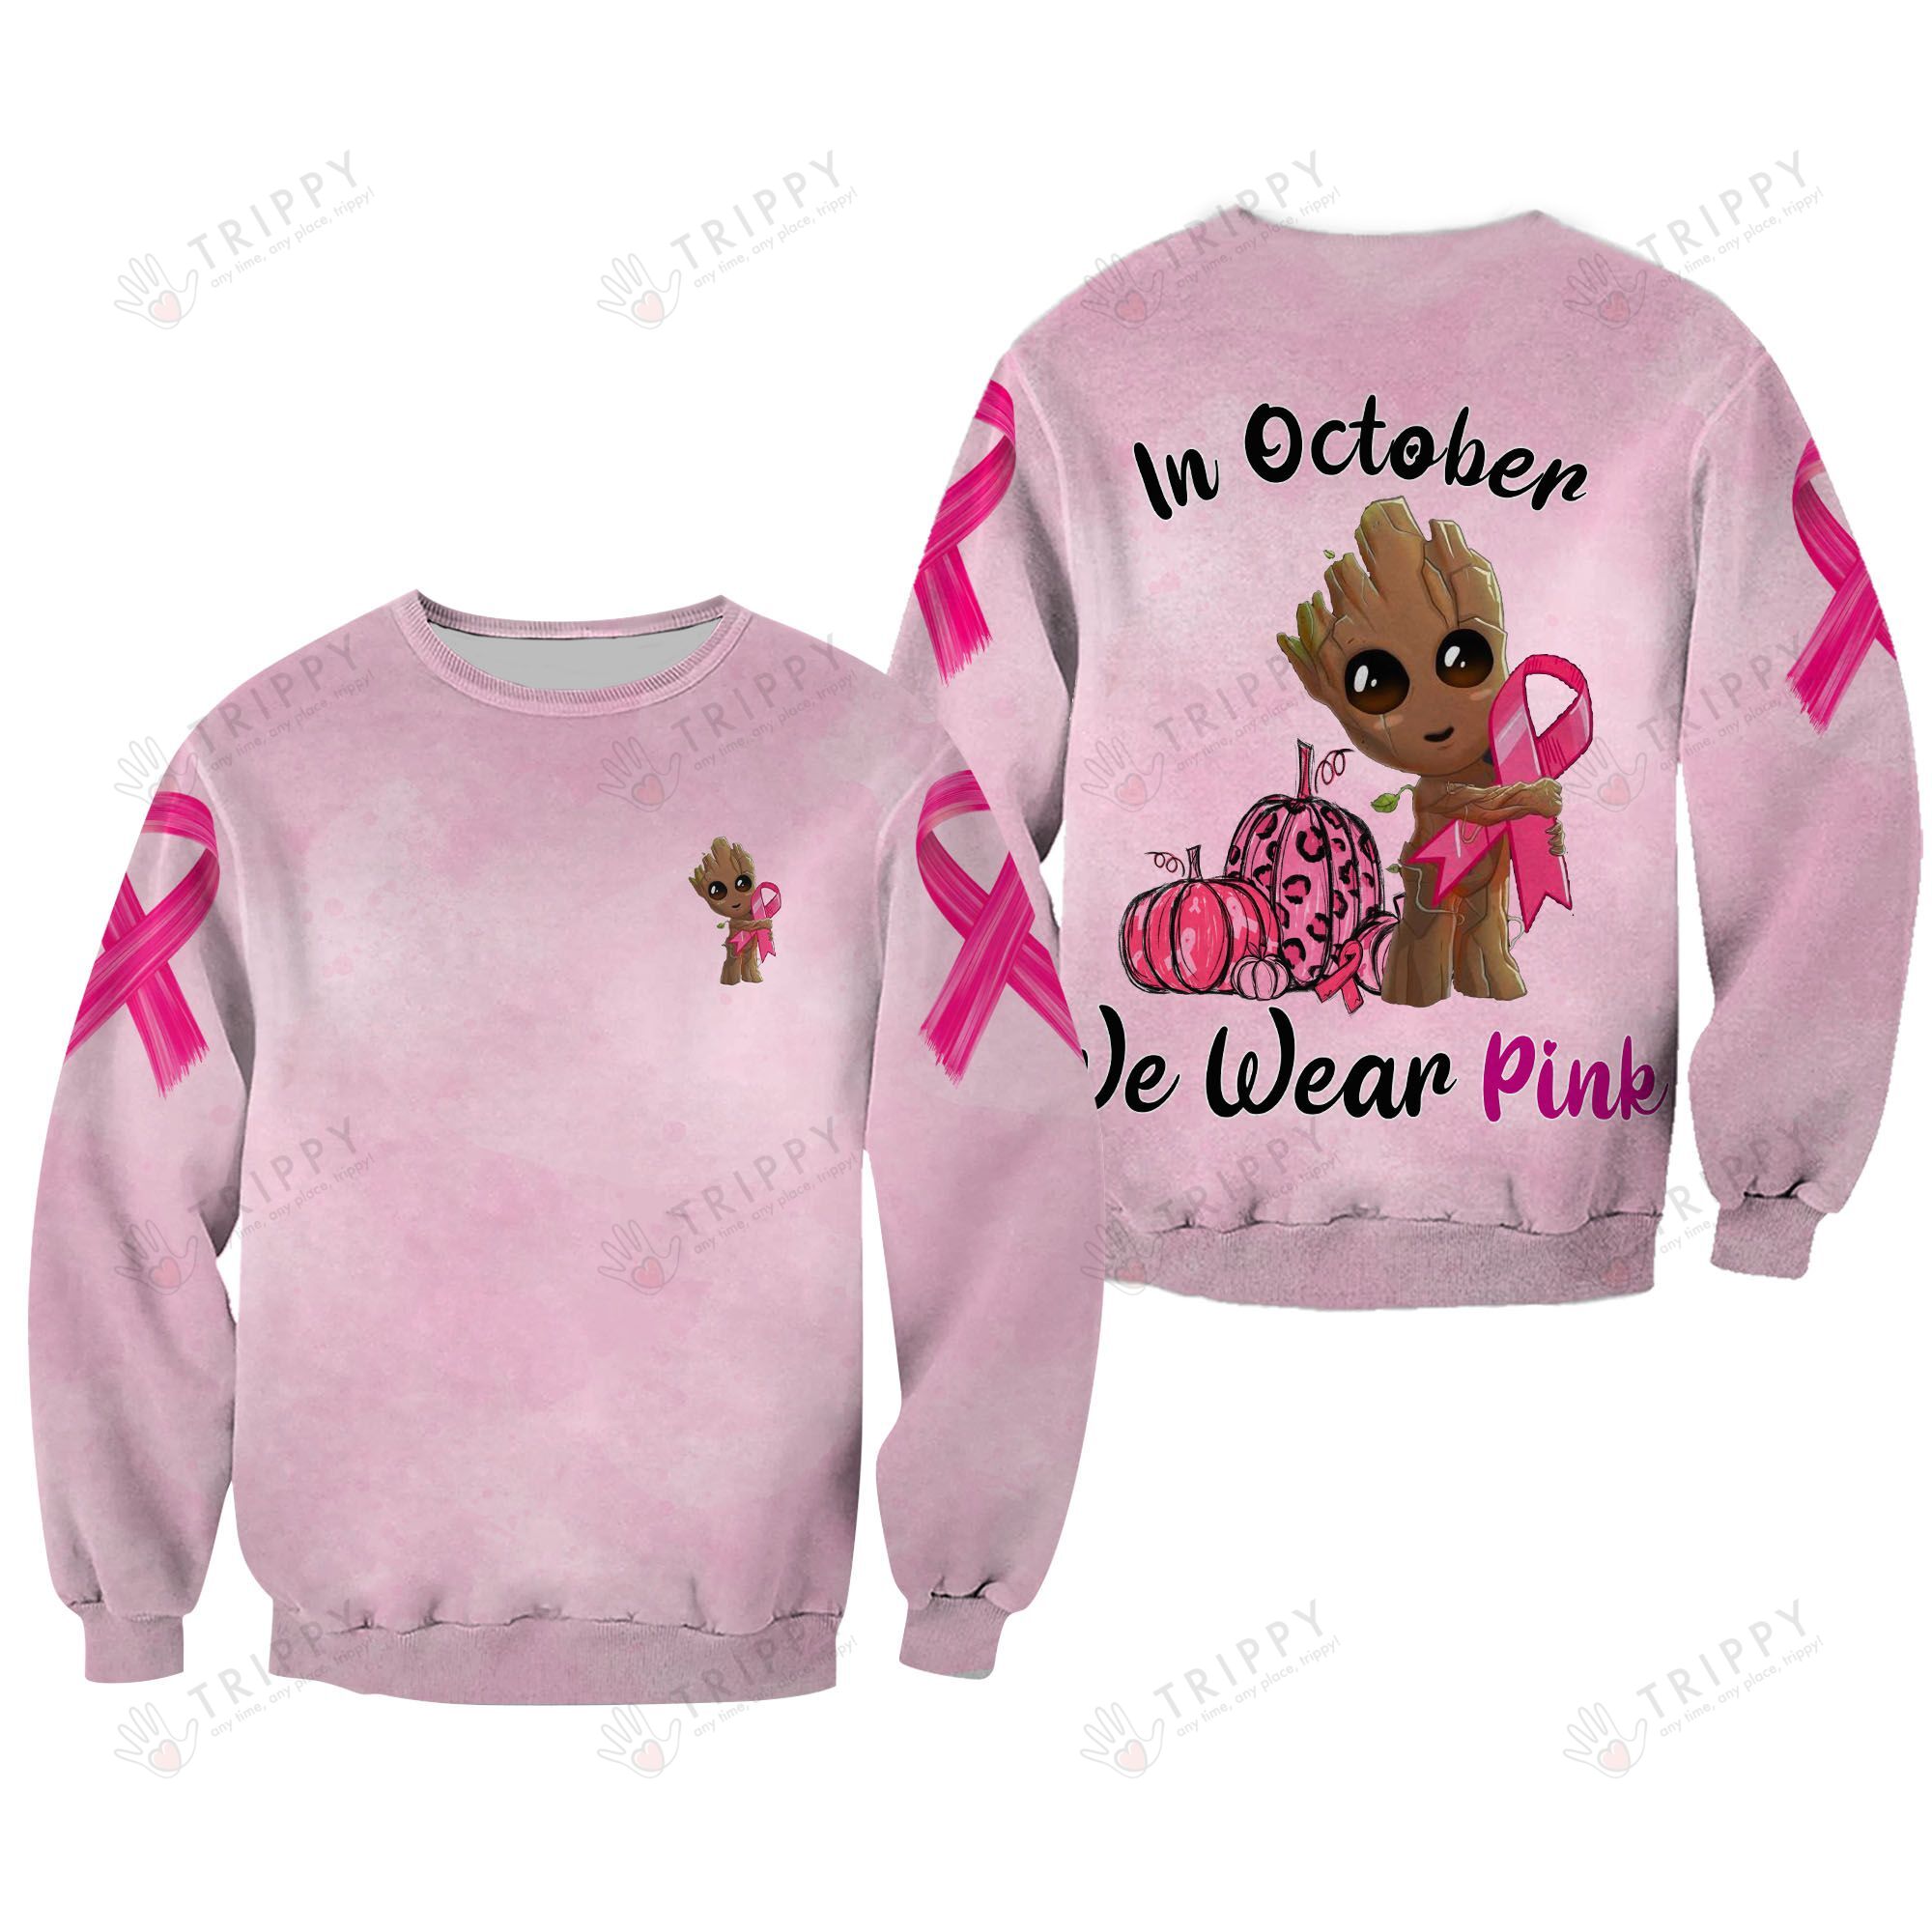 Groot Breast Cancer In October we were pink 3d hoodie, shirt 3